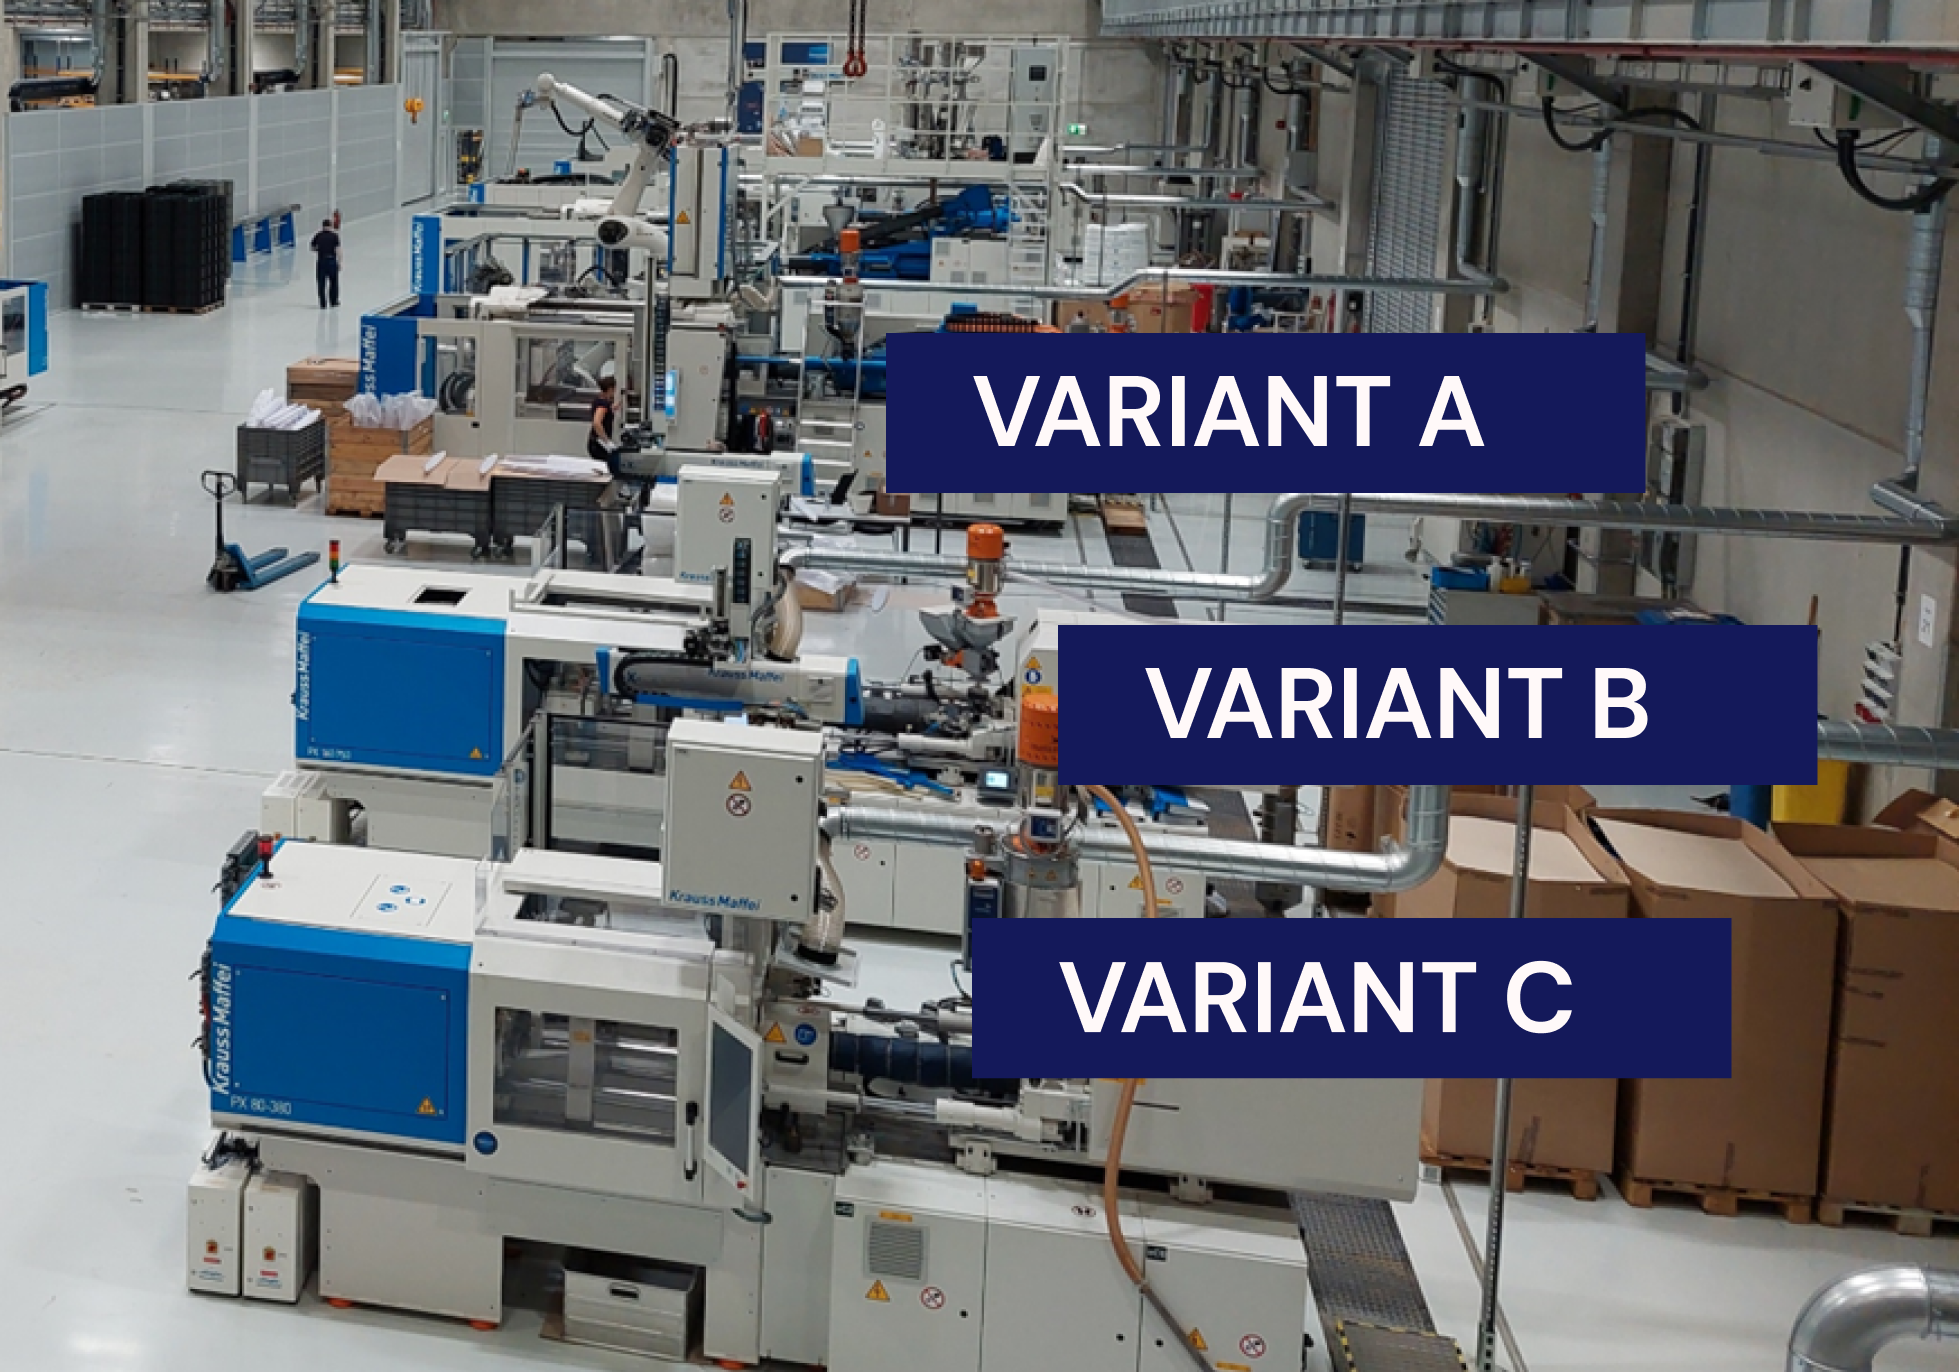 High variant variety in machine models